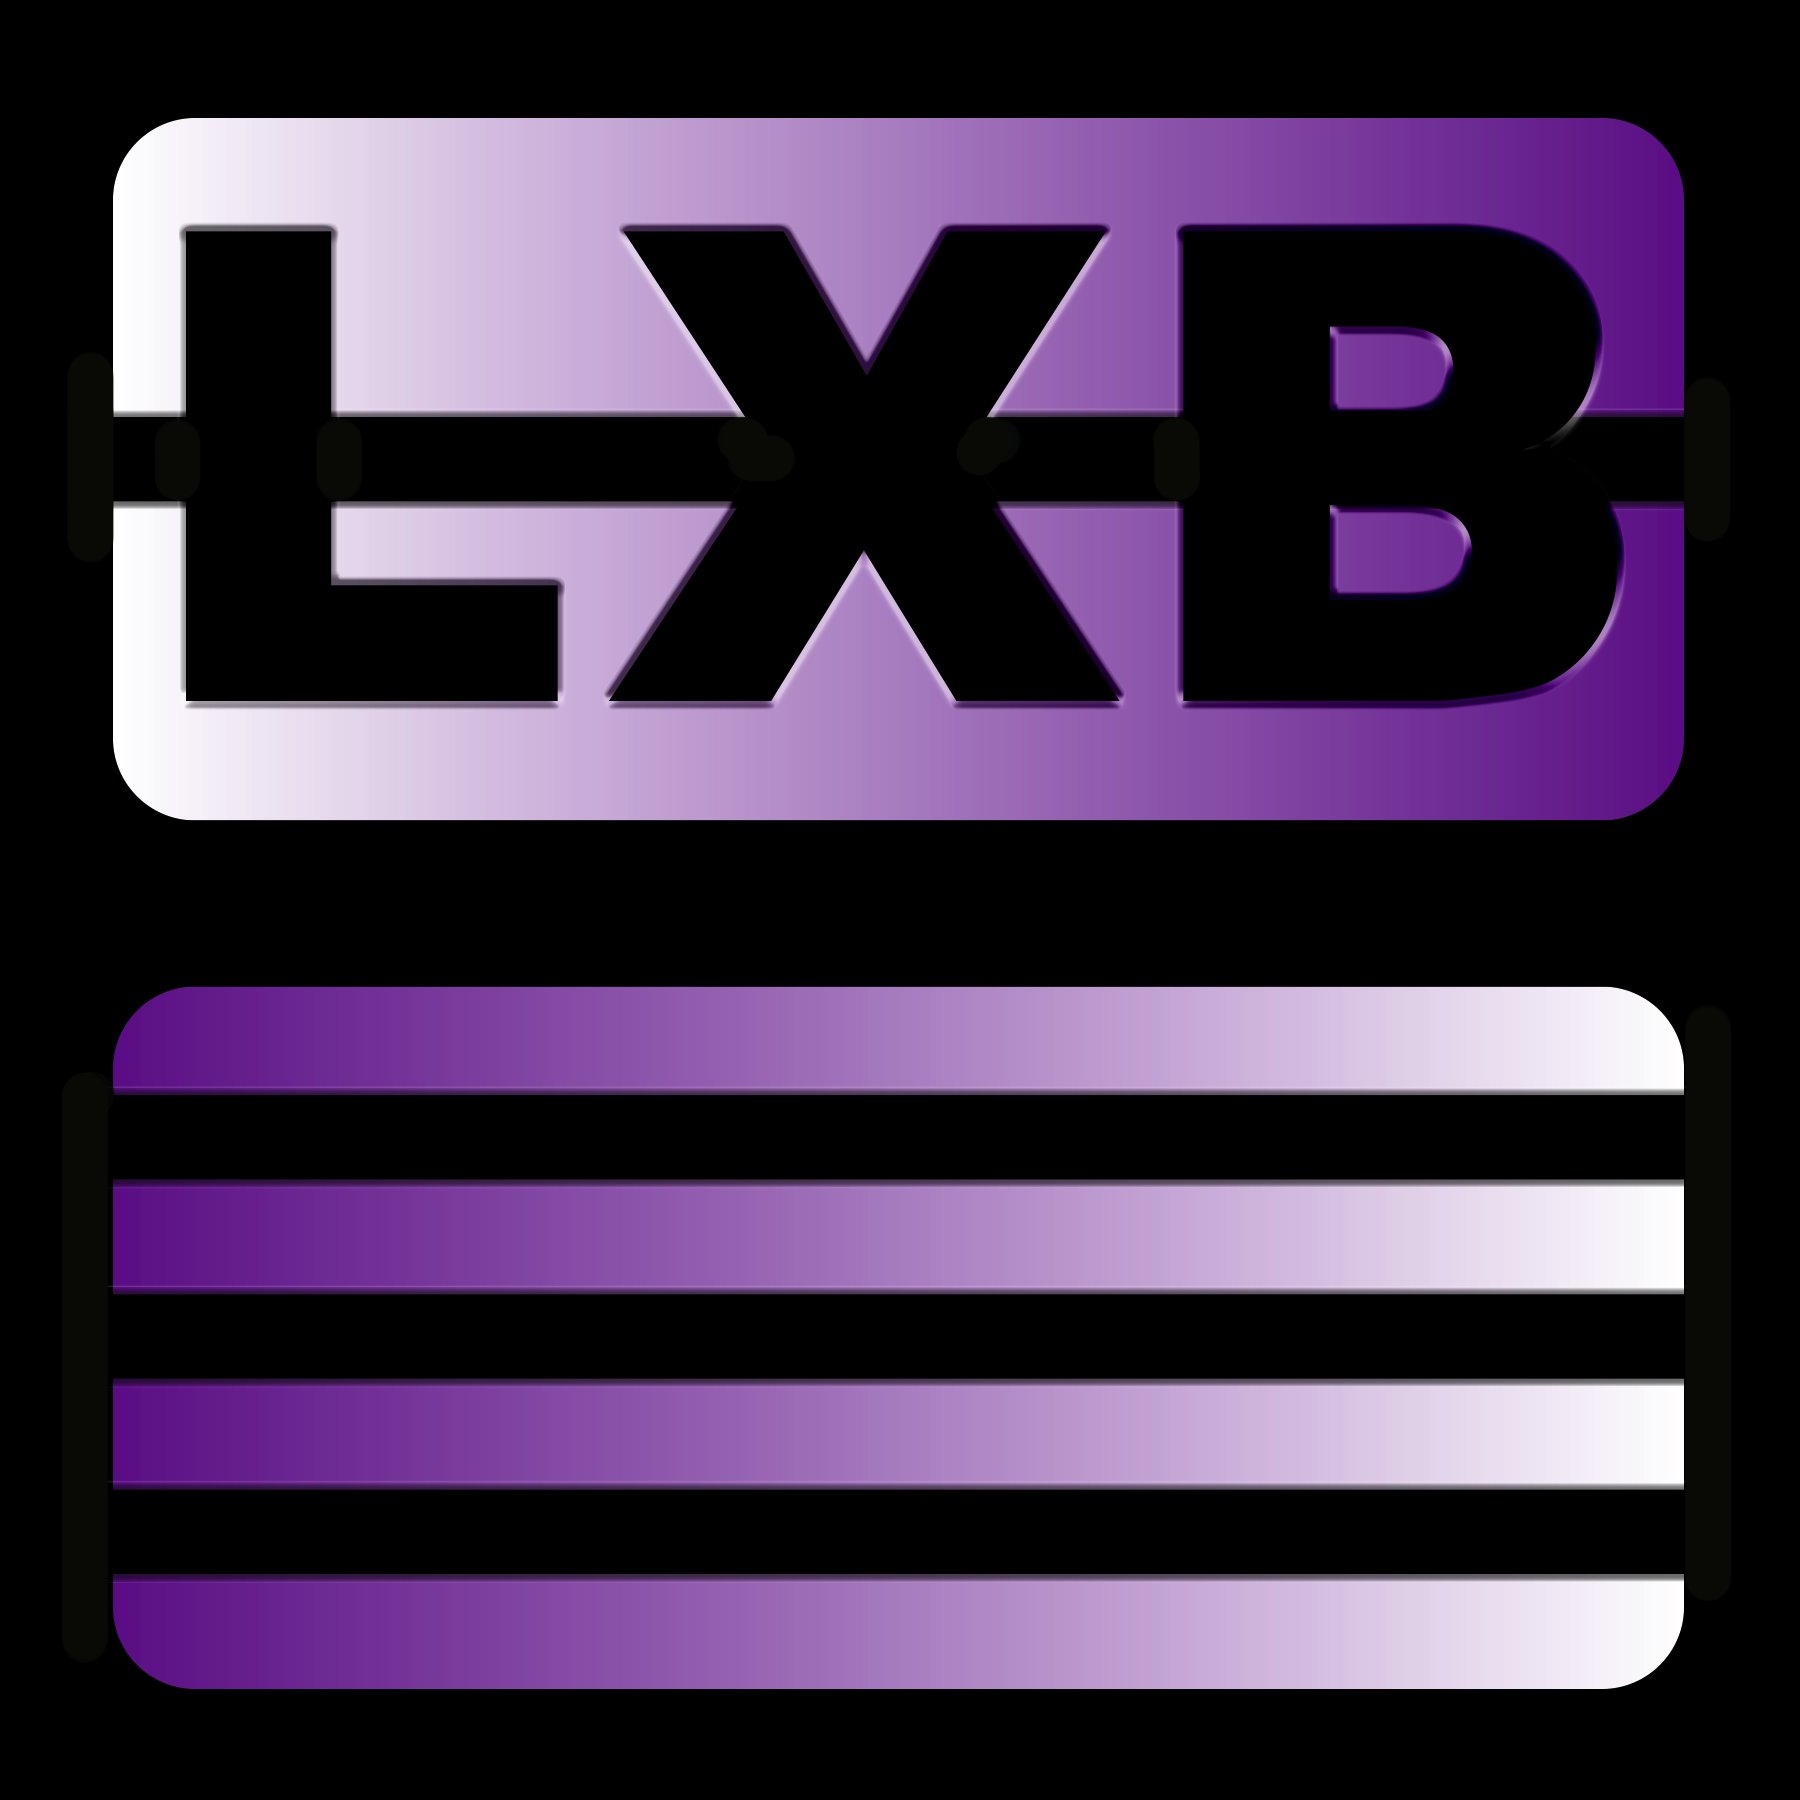 News – LXB – Budgie and Lol Tolhurst project